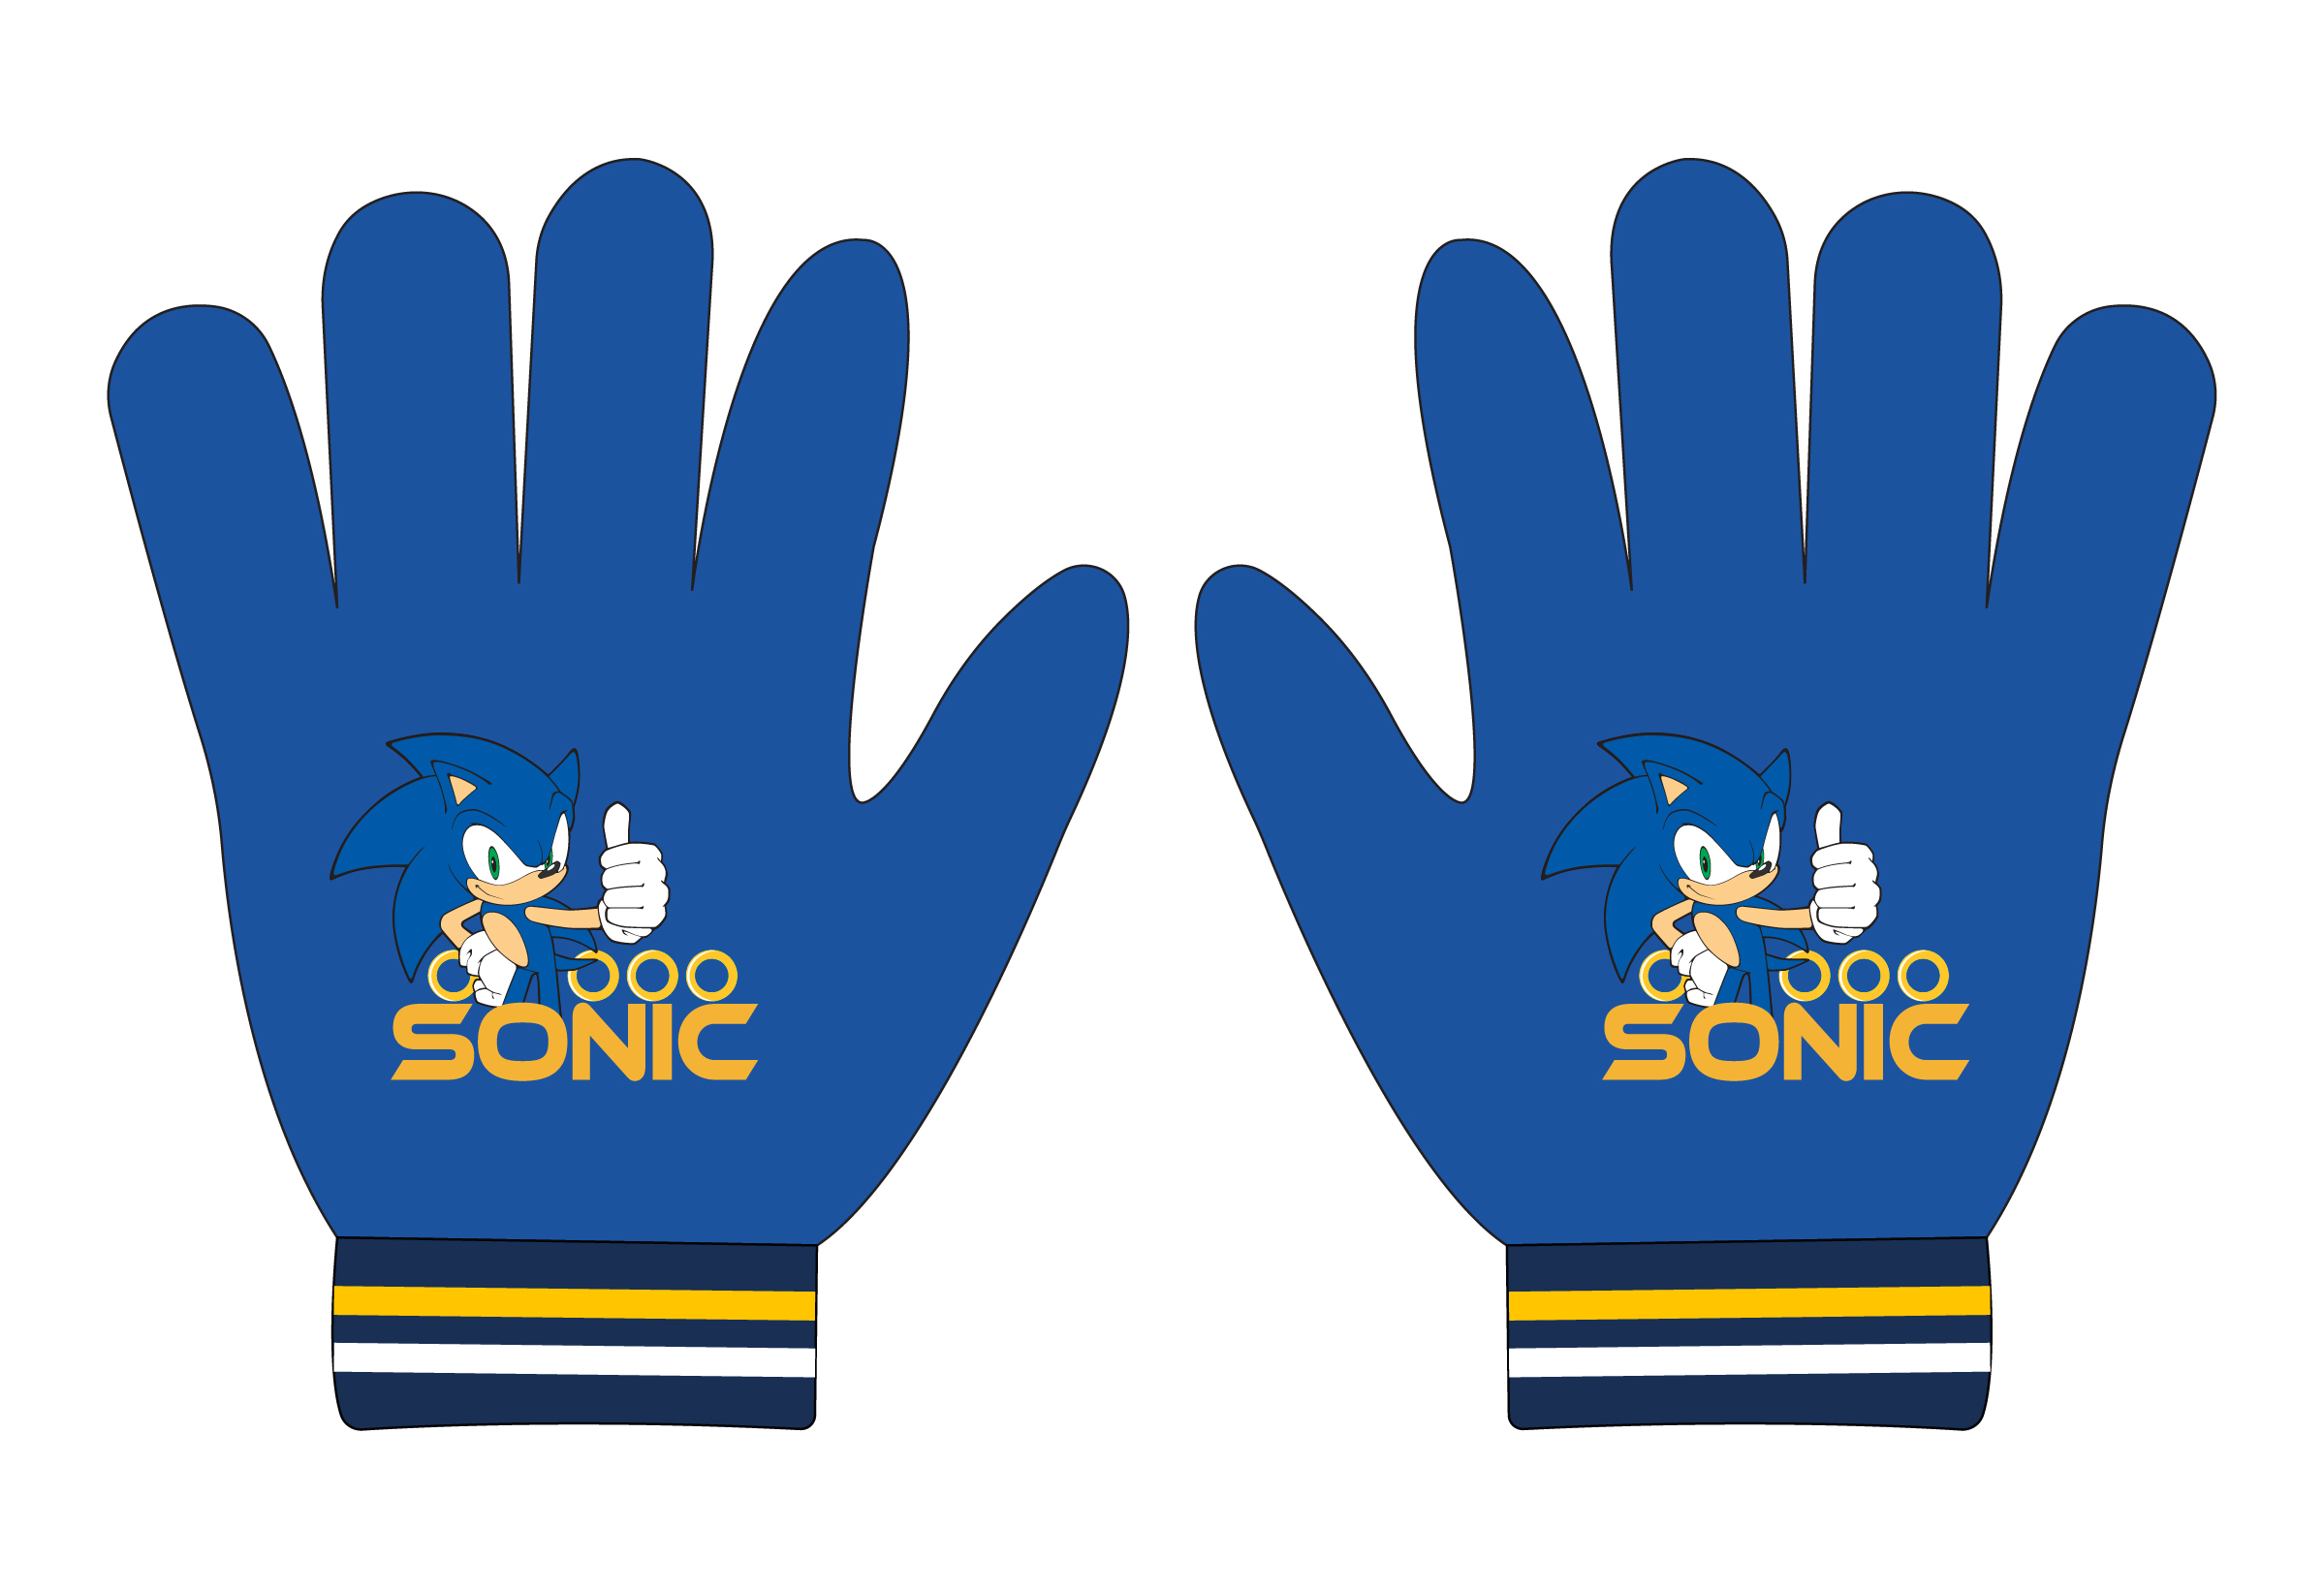 Ježek SONIC - licence Chlapecké rukavice - Ježek Sonic 5242080, modrá Barva: Modrá, Velikost: uni velikost